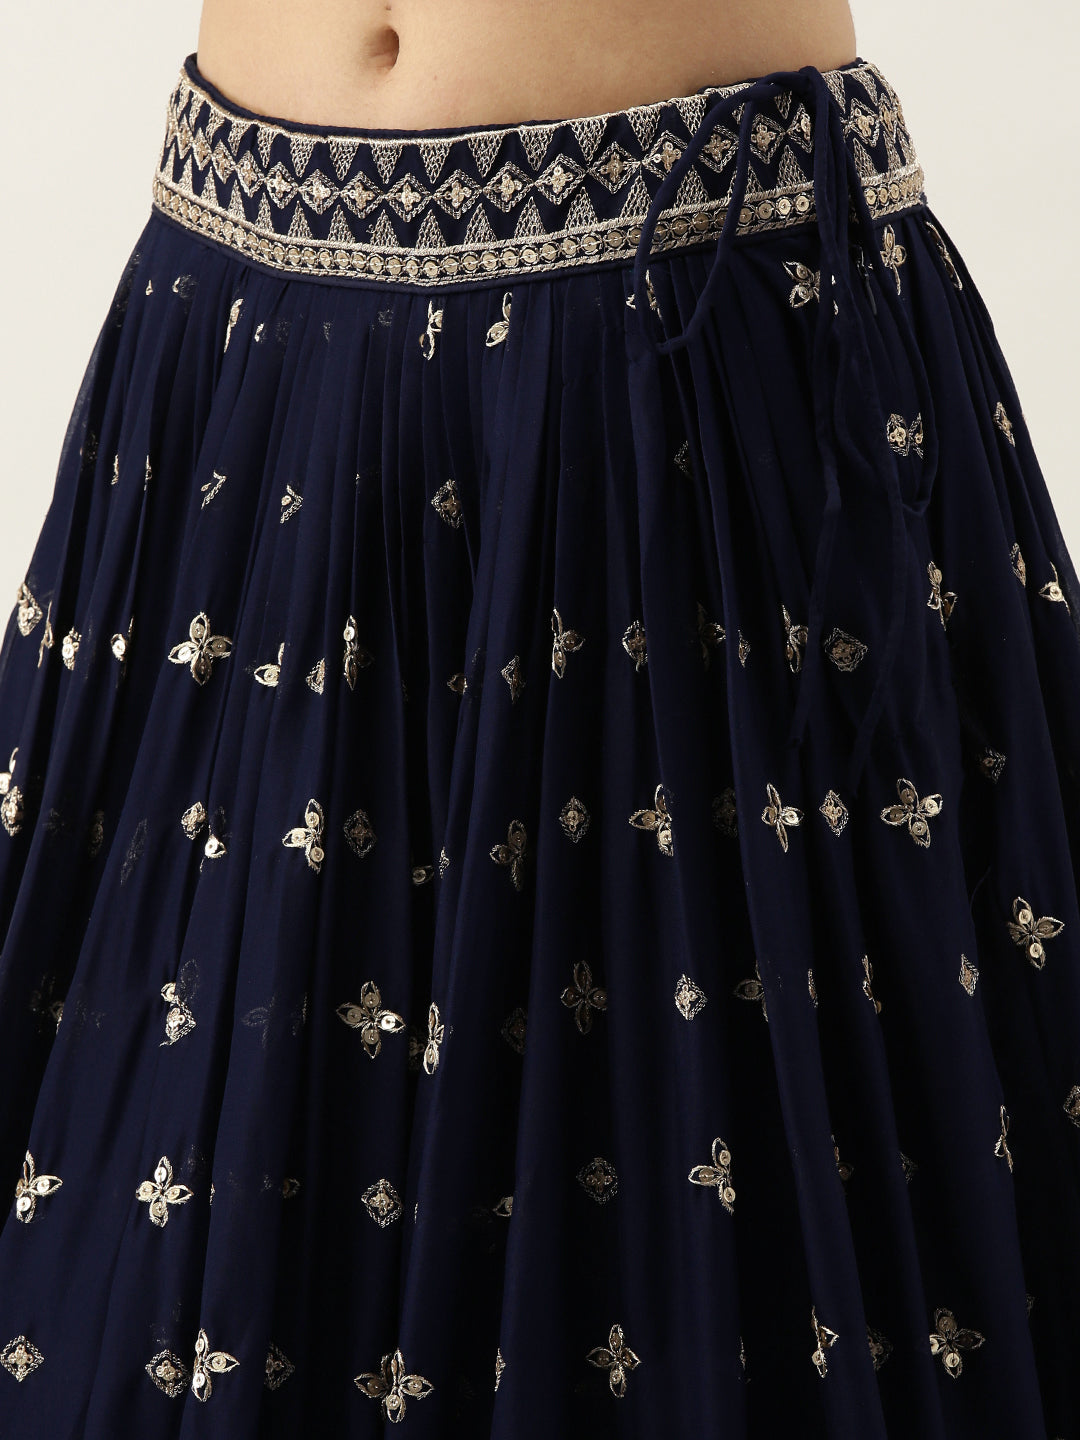 Women's Navy Blue Pure Georgette Embroidered Lehenga & Blouse, Dupatta - Royal Dwells